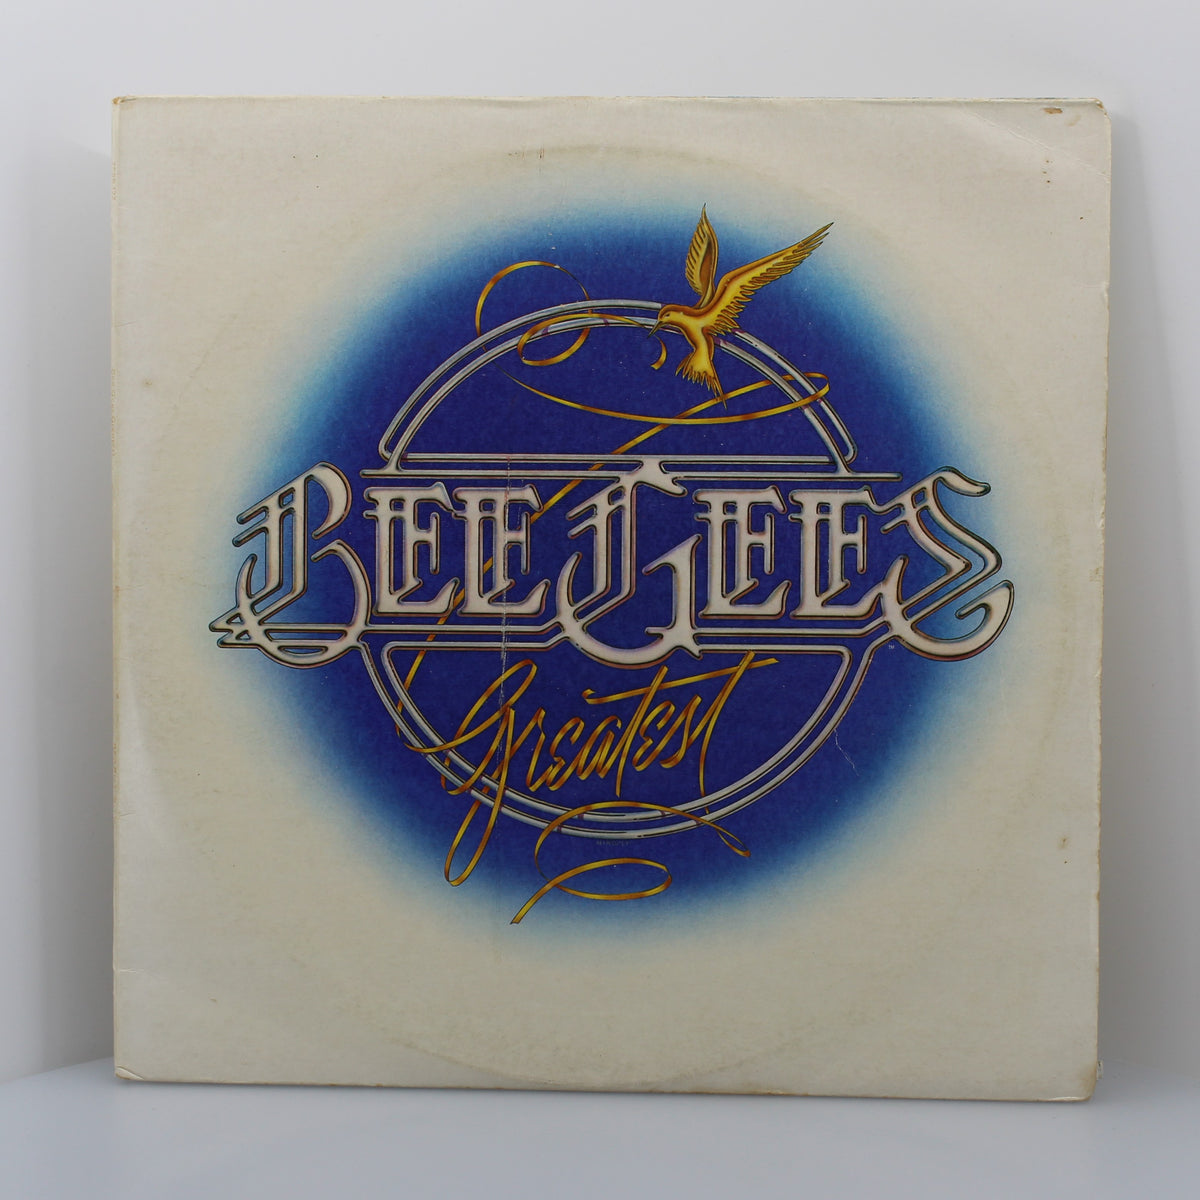 Bee Gees - Greatest, Vinyl 2xLP Album 33Rpm Compilation, Portugal 1979